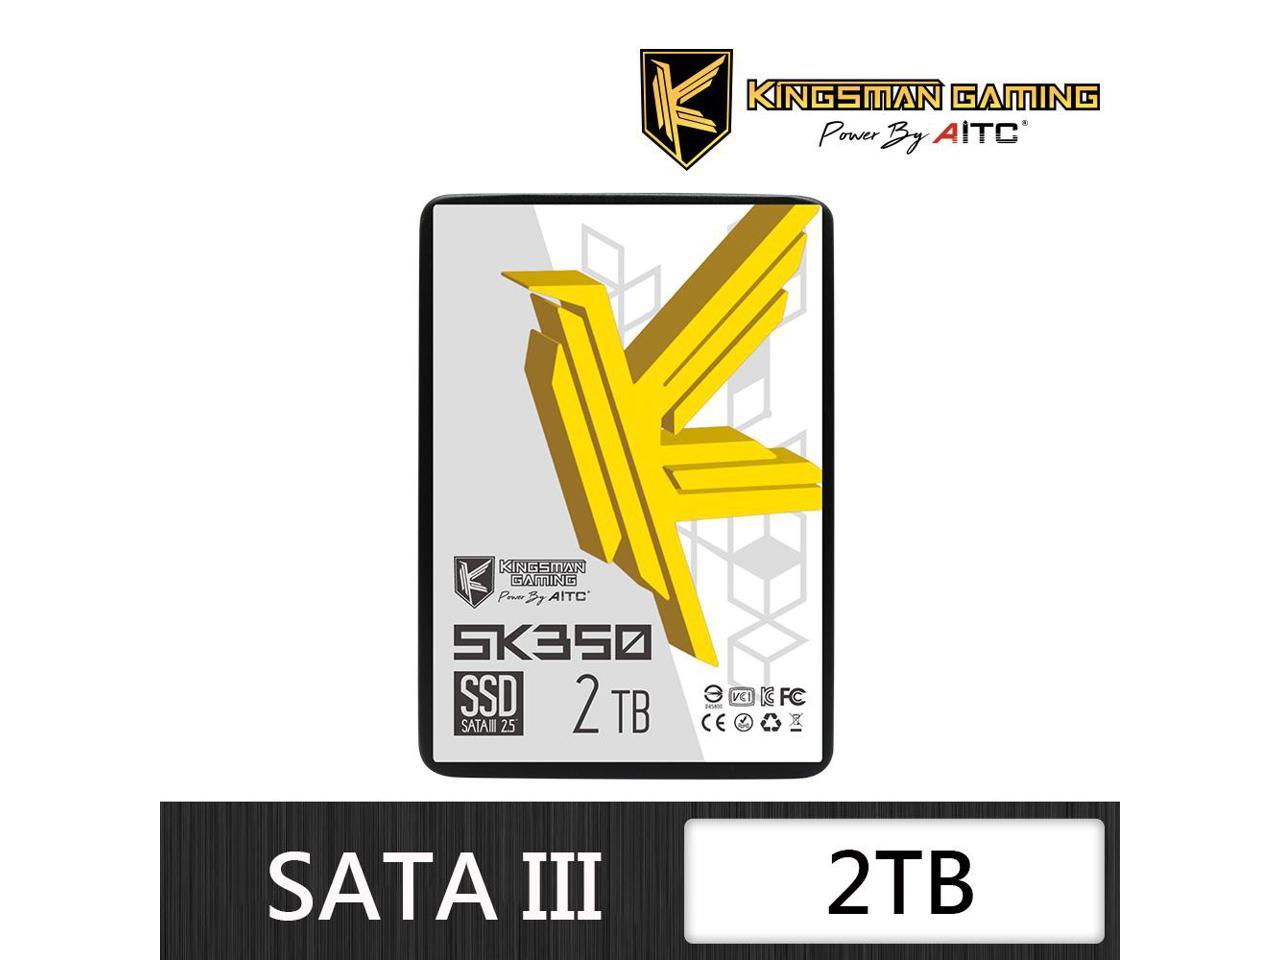 AITC Kingsman 2TB SK350 SSD TLC SSD固態硬碟